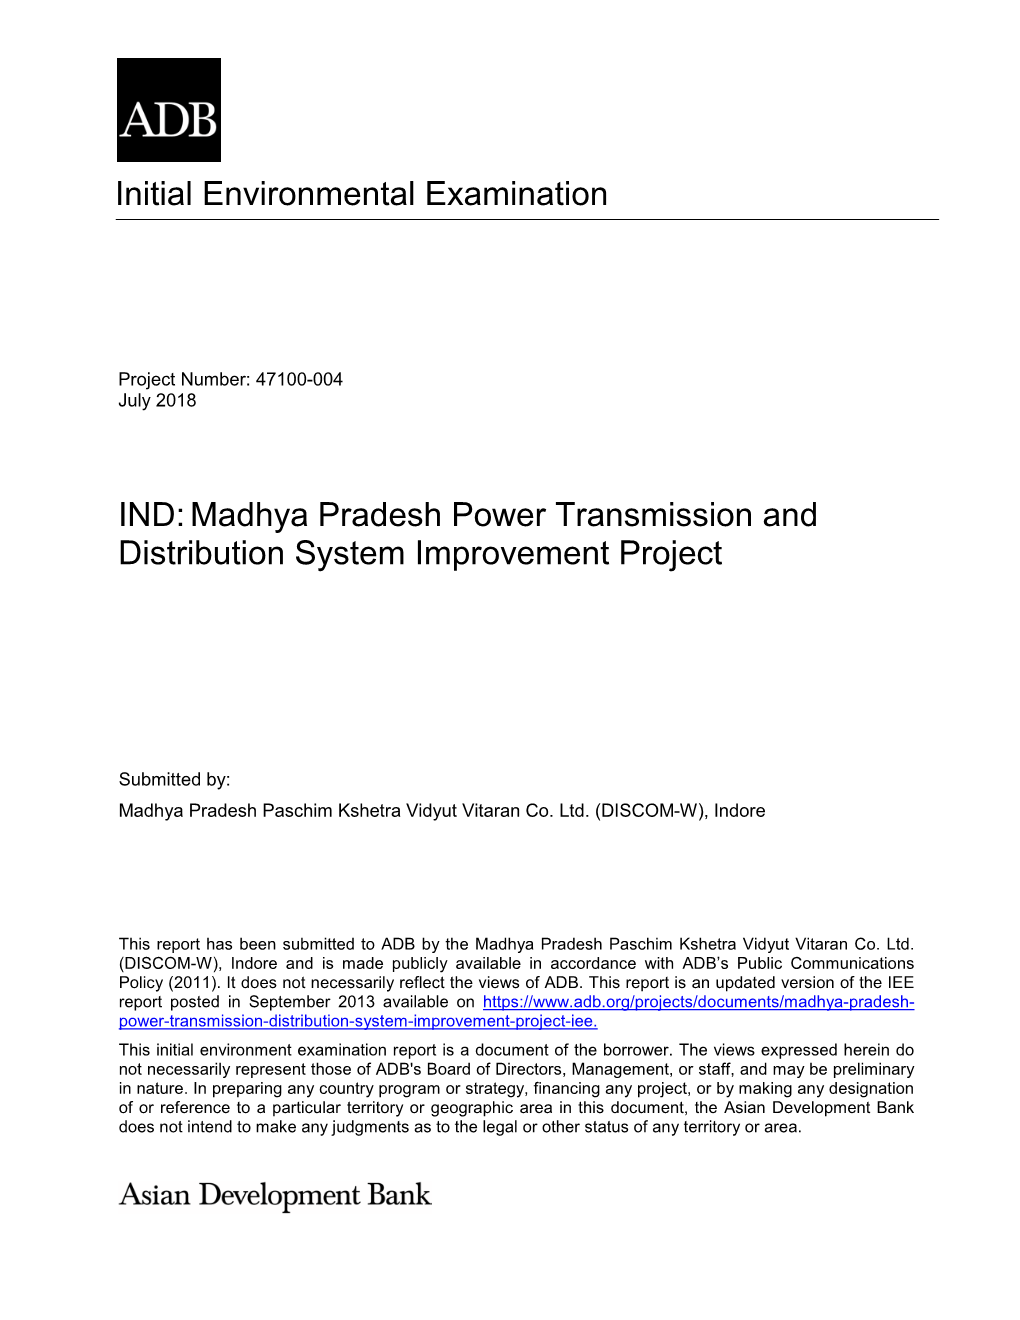 Initial Environmental Examination IND:Madhya Pradesh Power